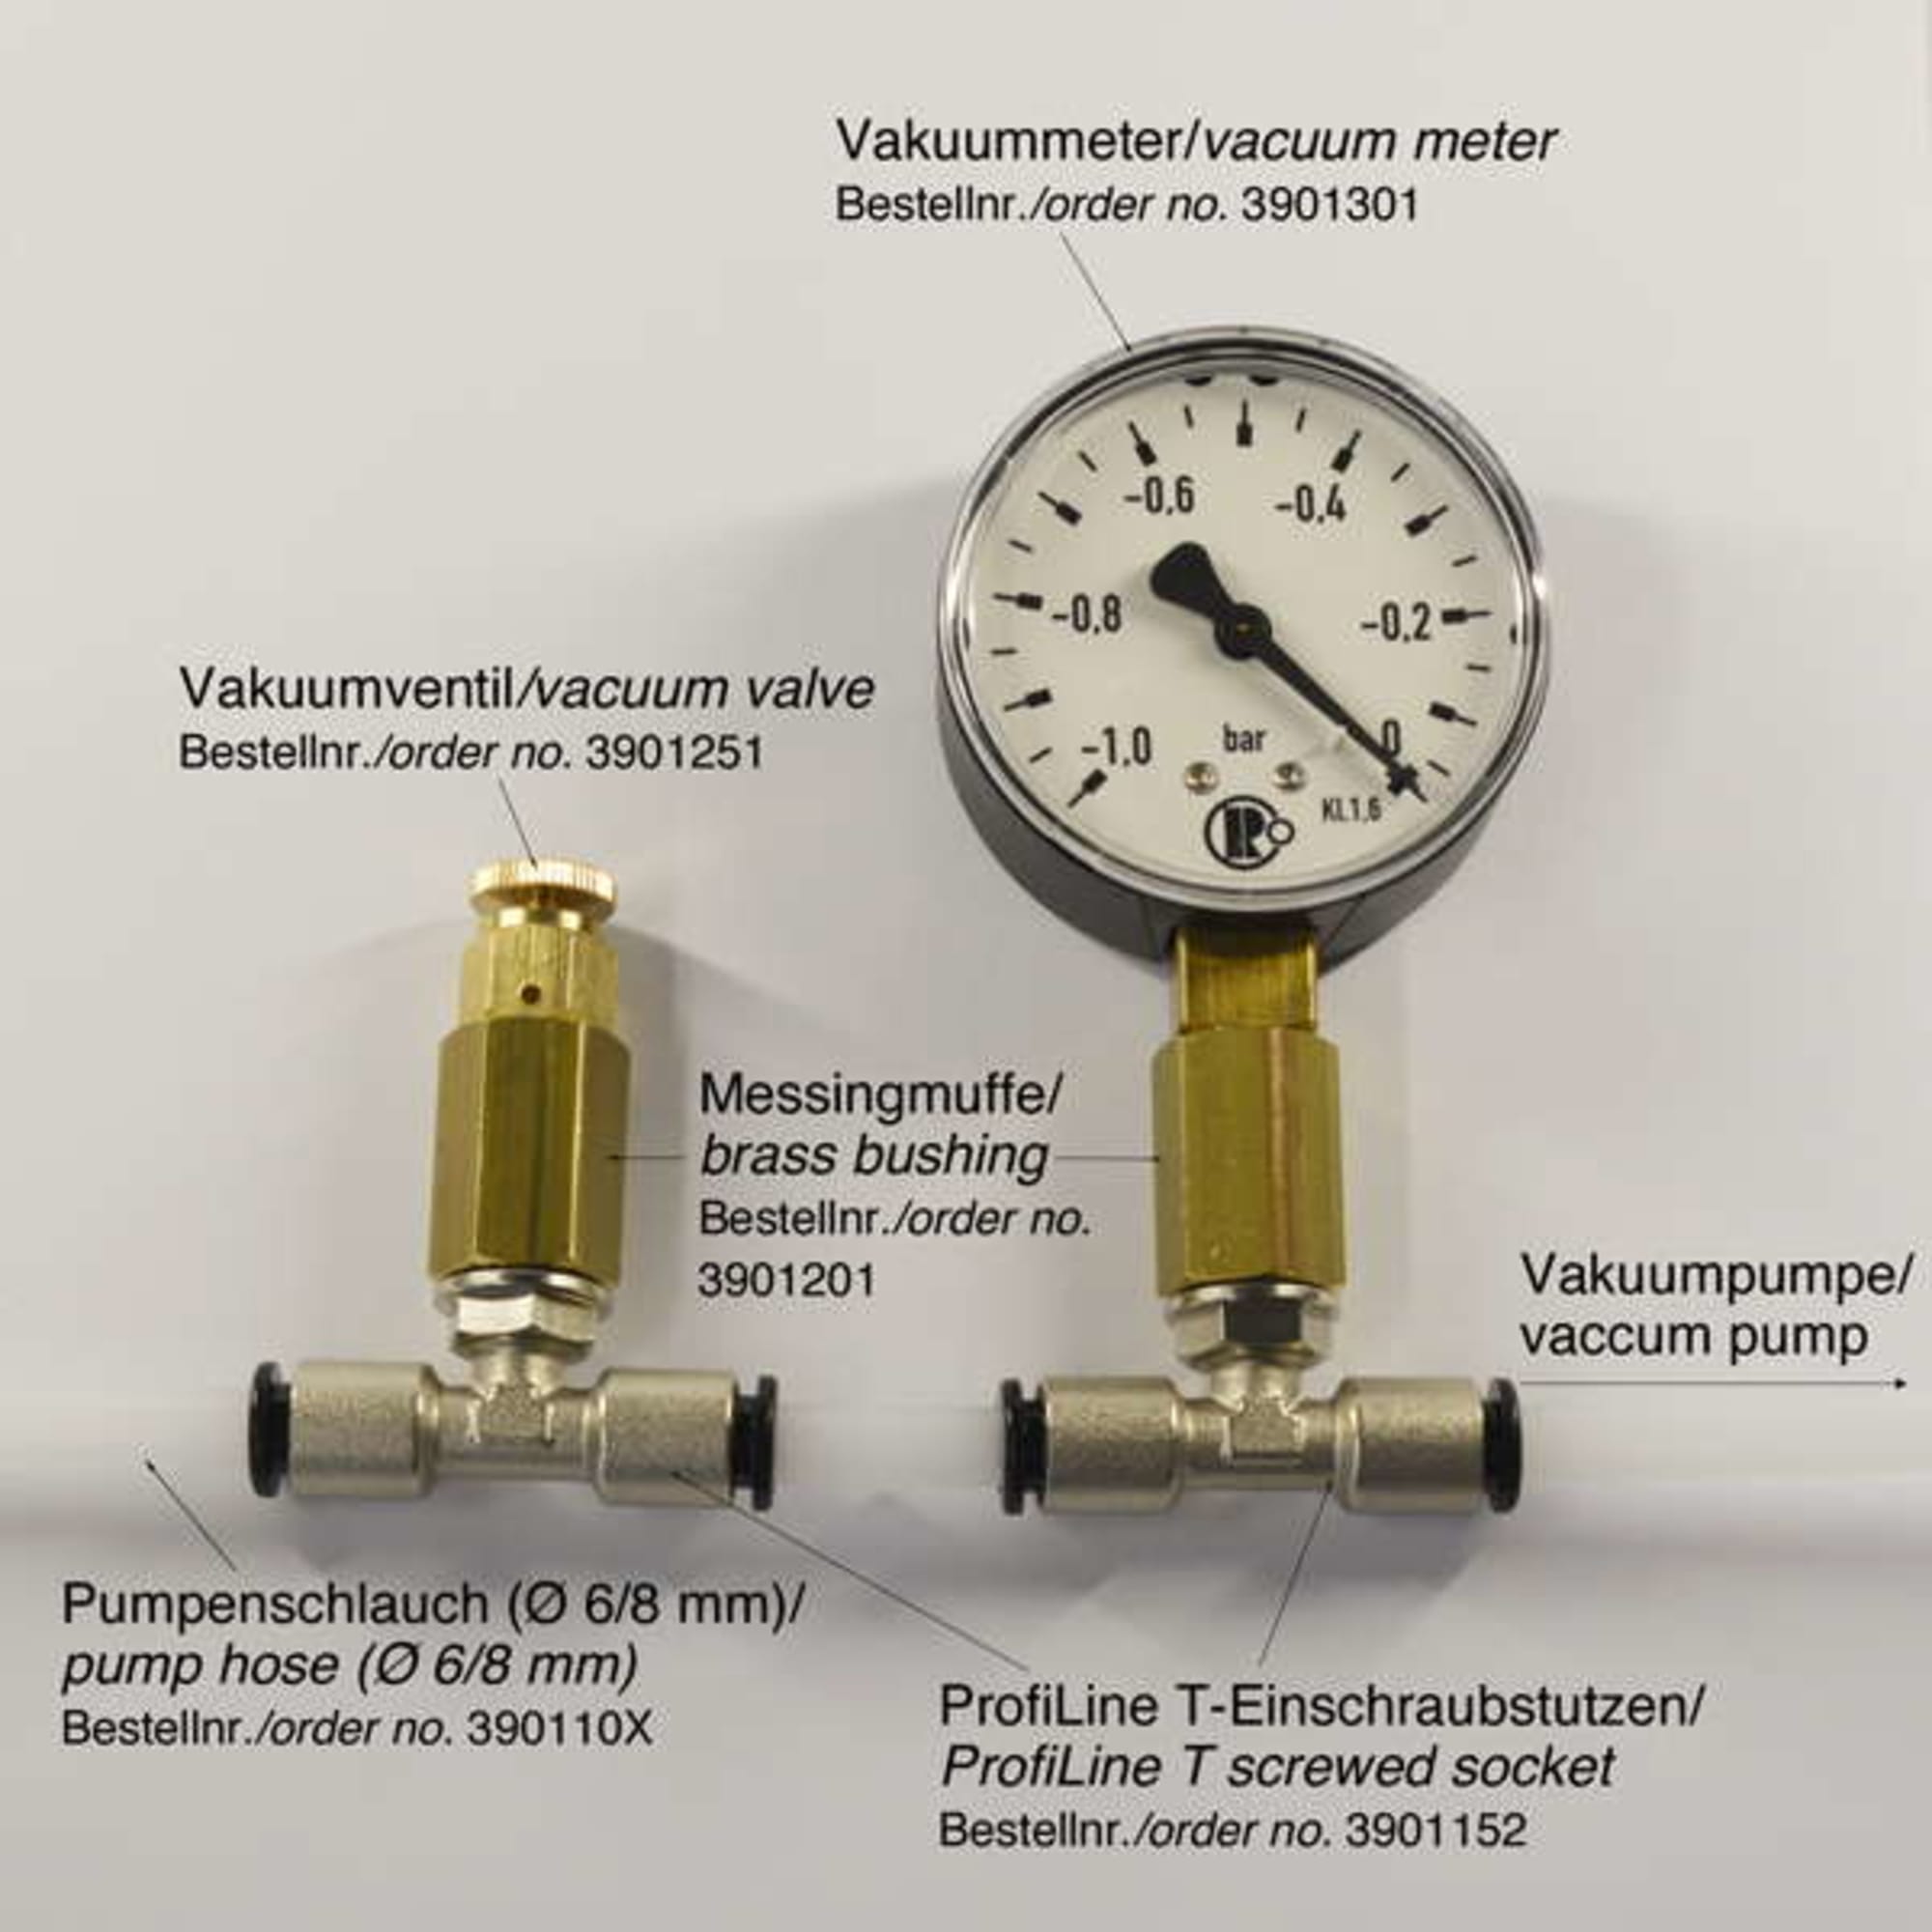 Vacuum meter, image 4